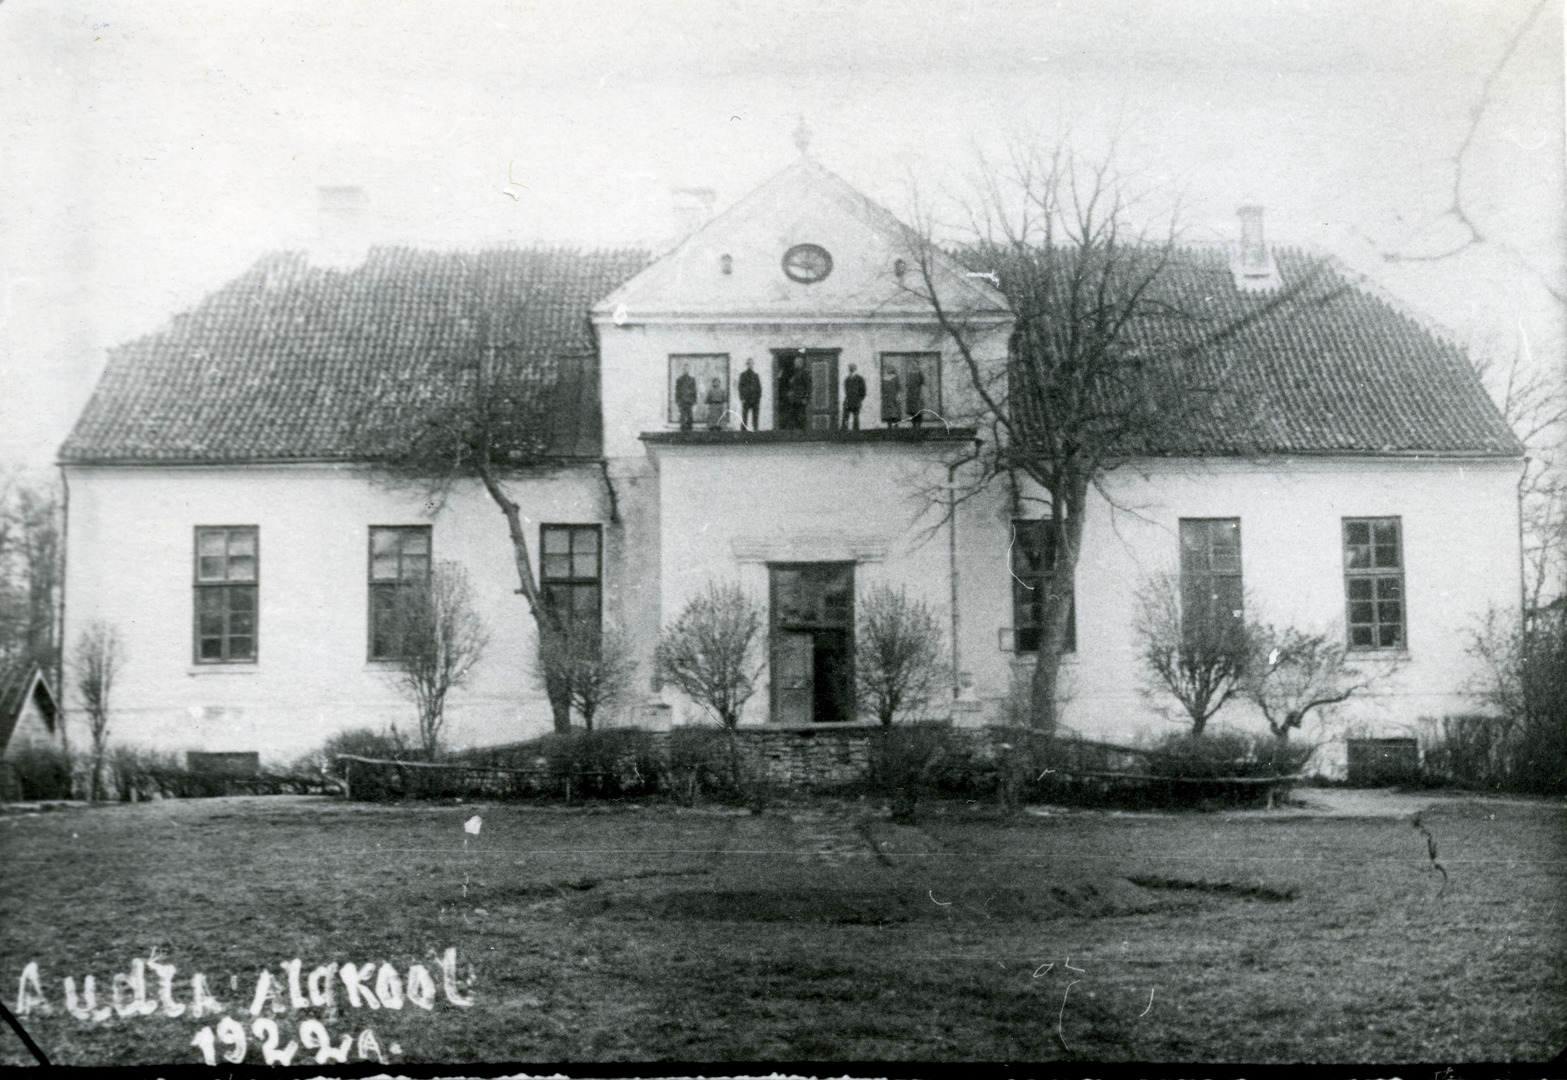 Audla School House in 1922